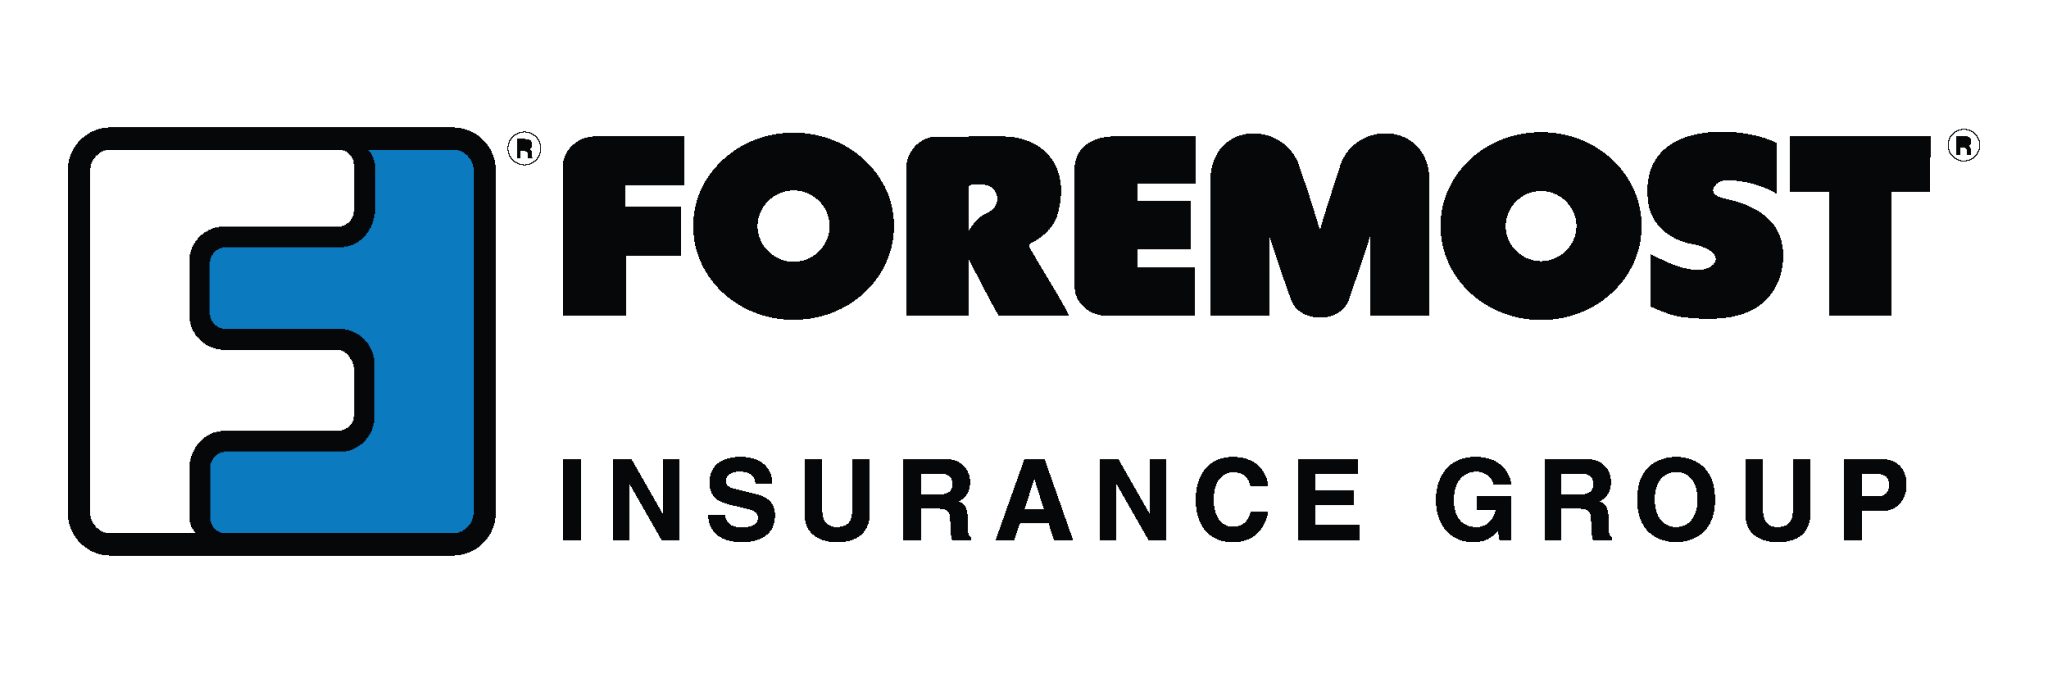 Foremost Insurance at Cornerstone Insurance